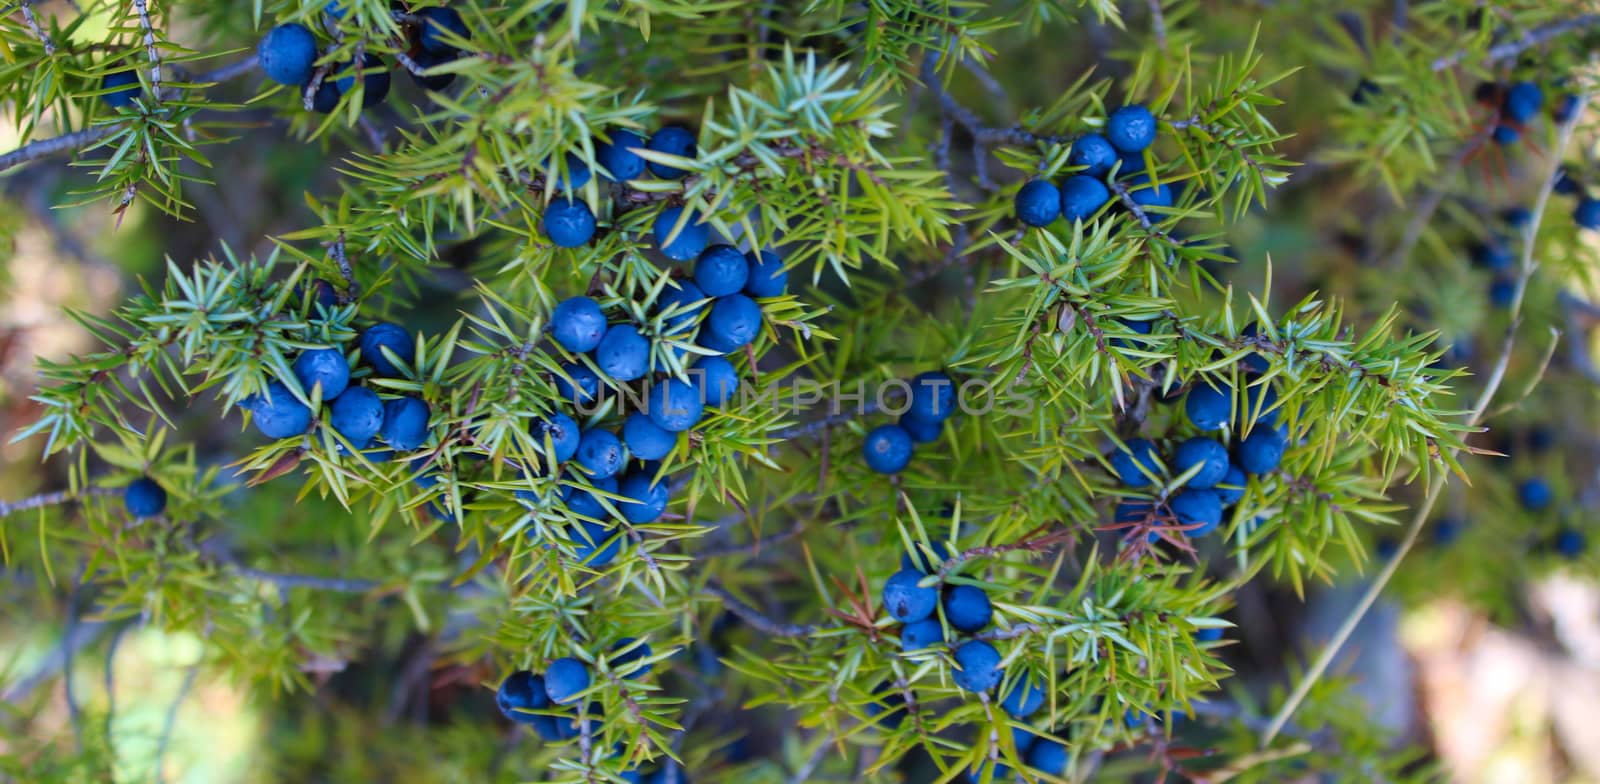 Banner of lots of ripe navy blue juniper berries all over the branch between the green needles. Juniperus communis fruit. Bjelasnica Mountain, Bosnia and Herzegovina.